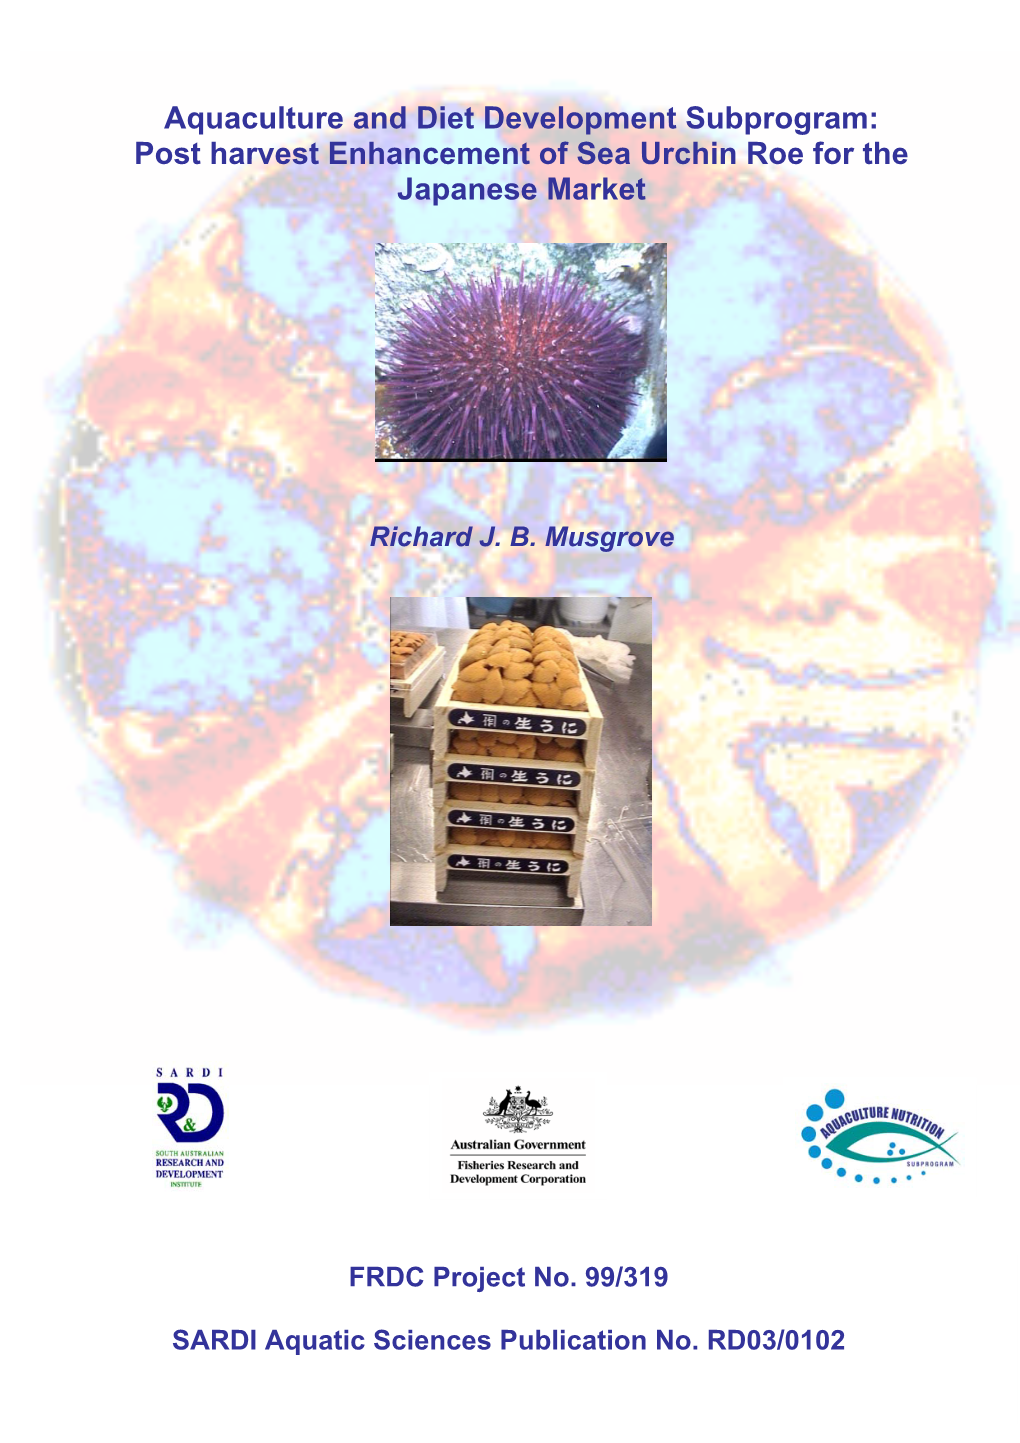 Processing Sea Urchin Roe - John Vairy (NSW Industry Representative):